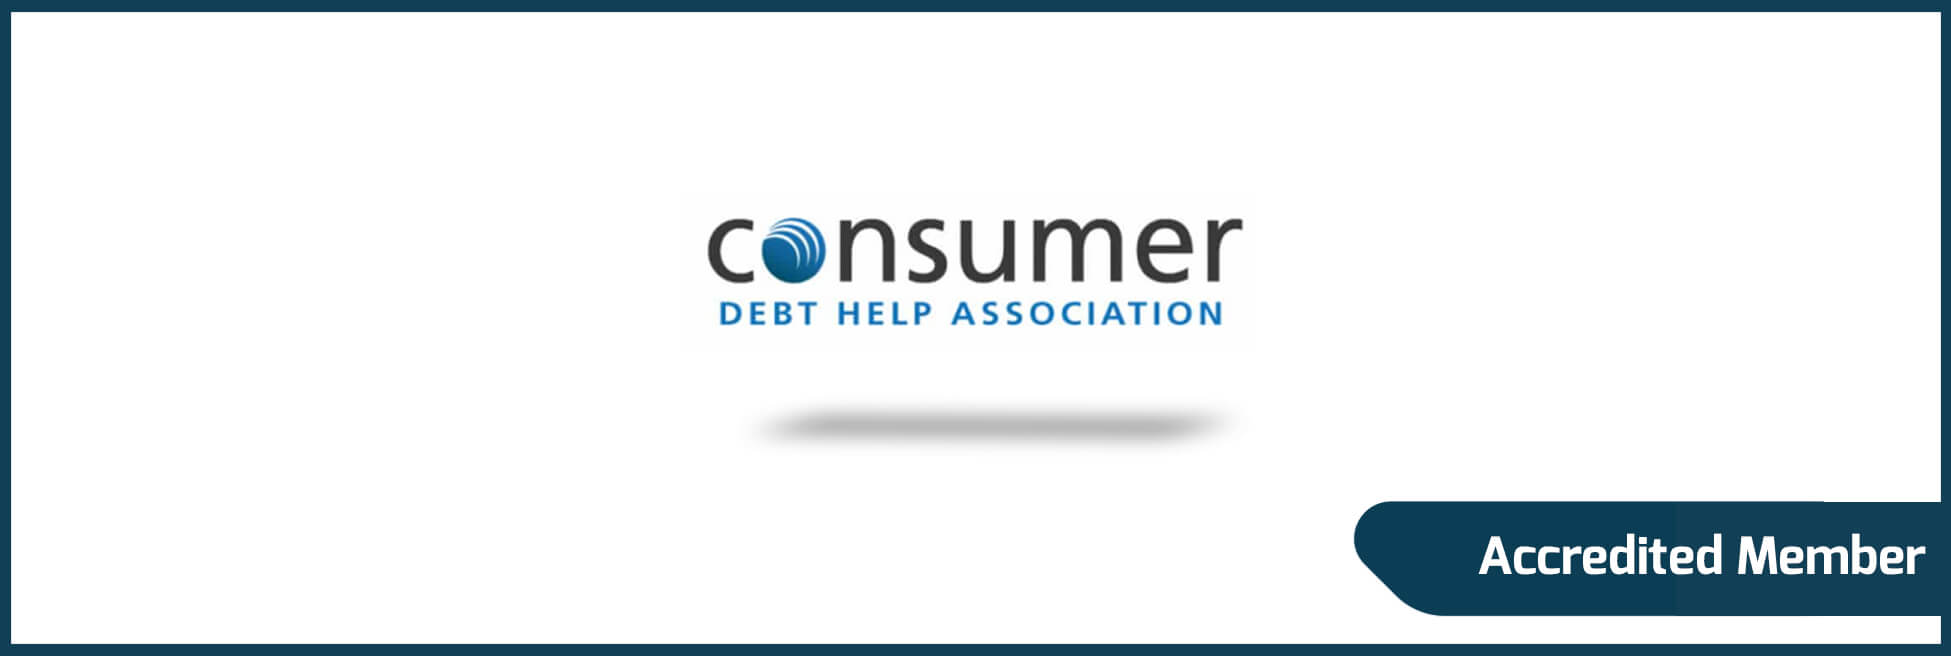 Consumer Debt Help Association, LLC